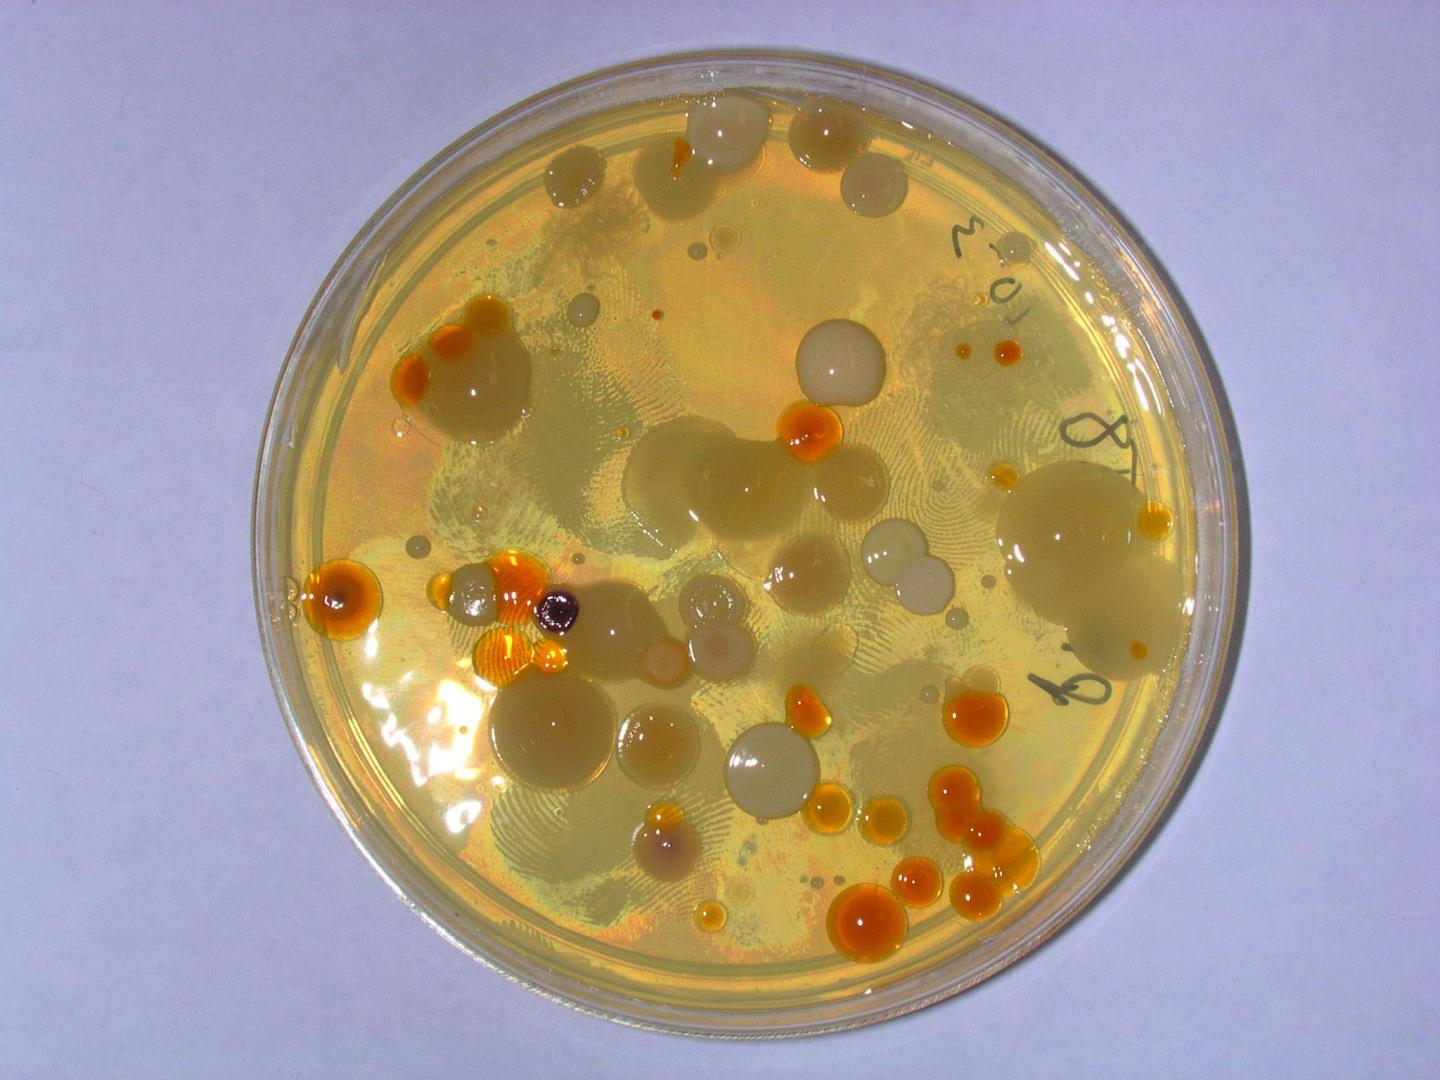 Dormancy in Microbial Communities